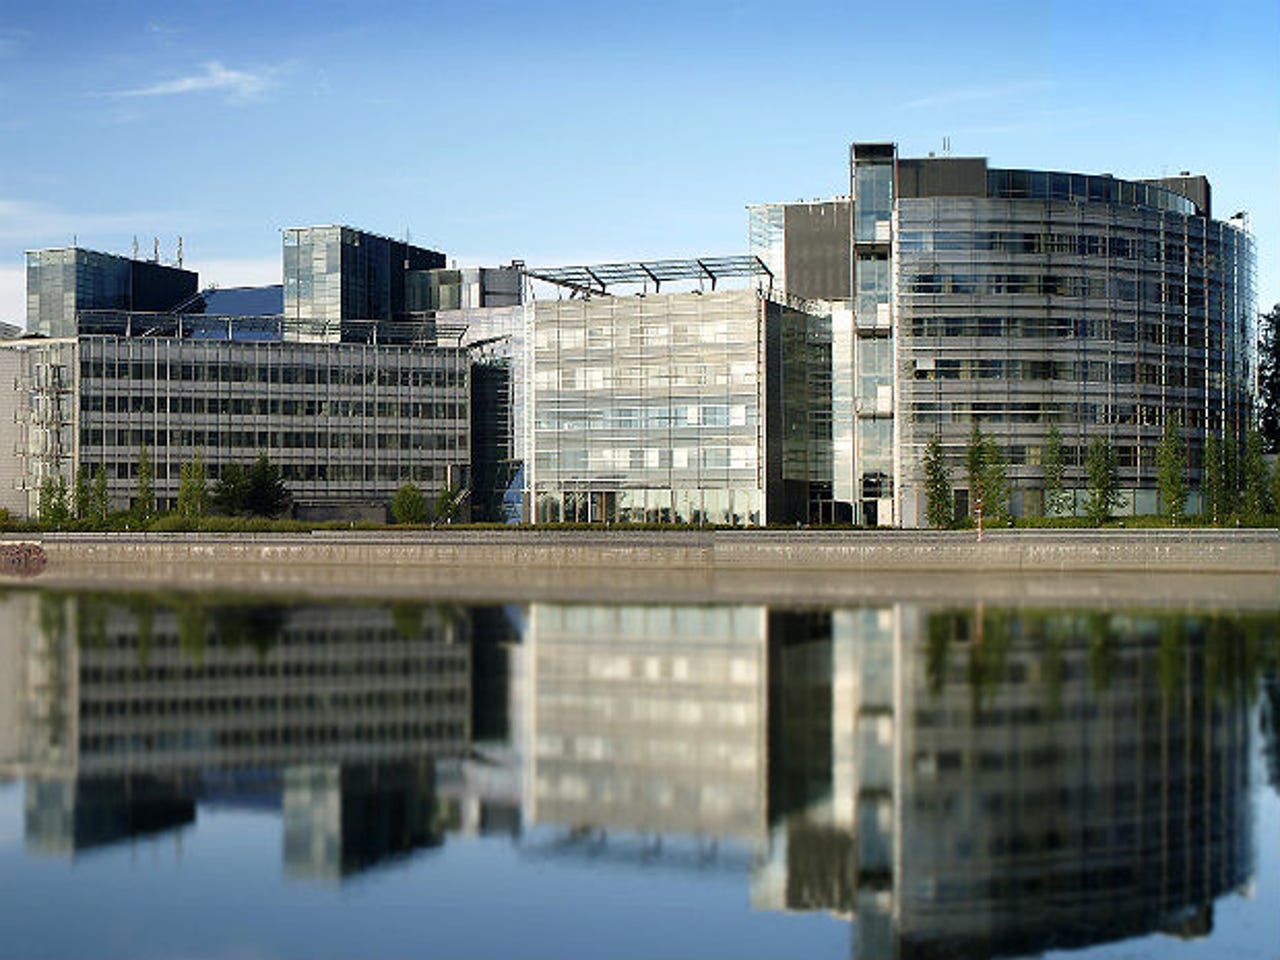 Nokia's former headquarters in Espoo, now a Microsoft facility